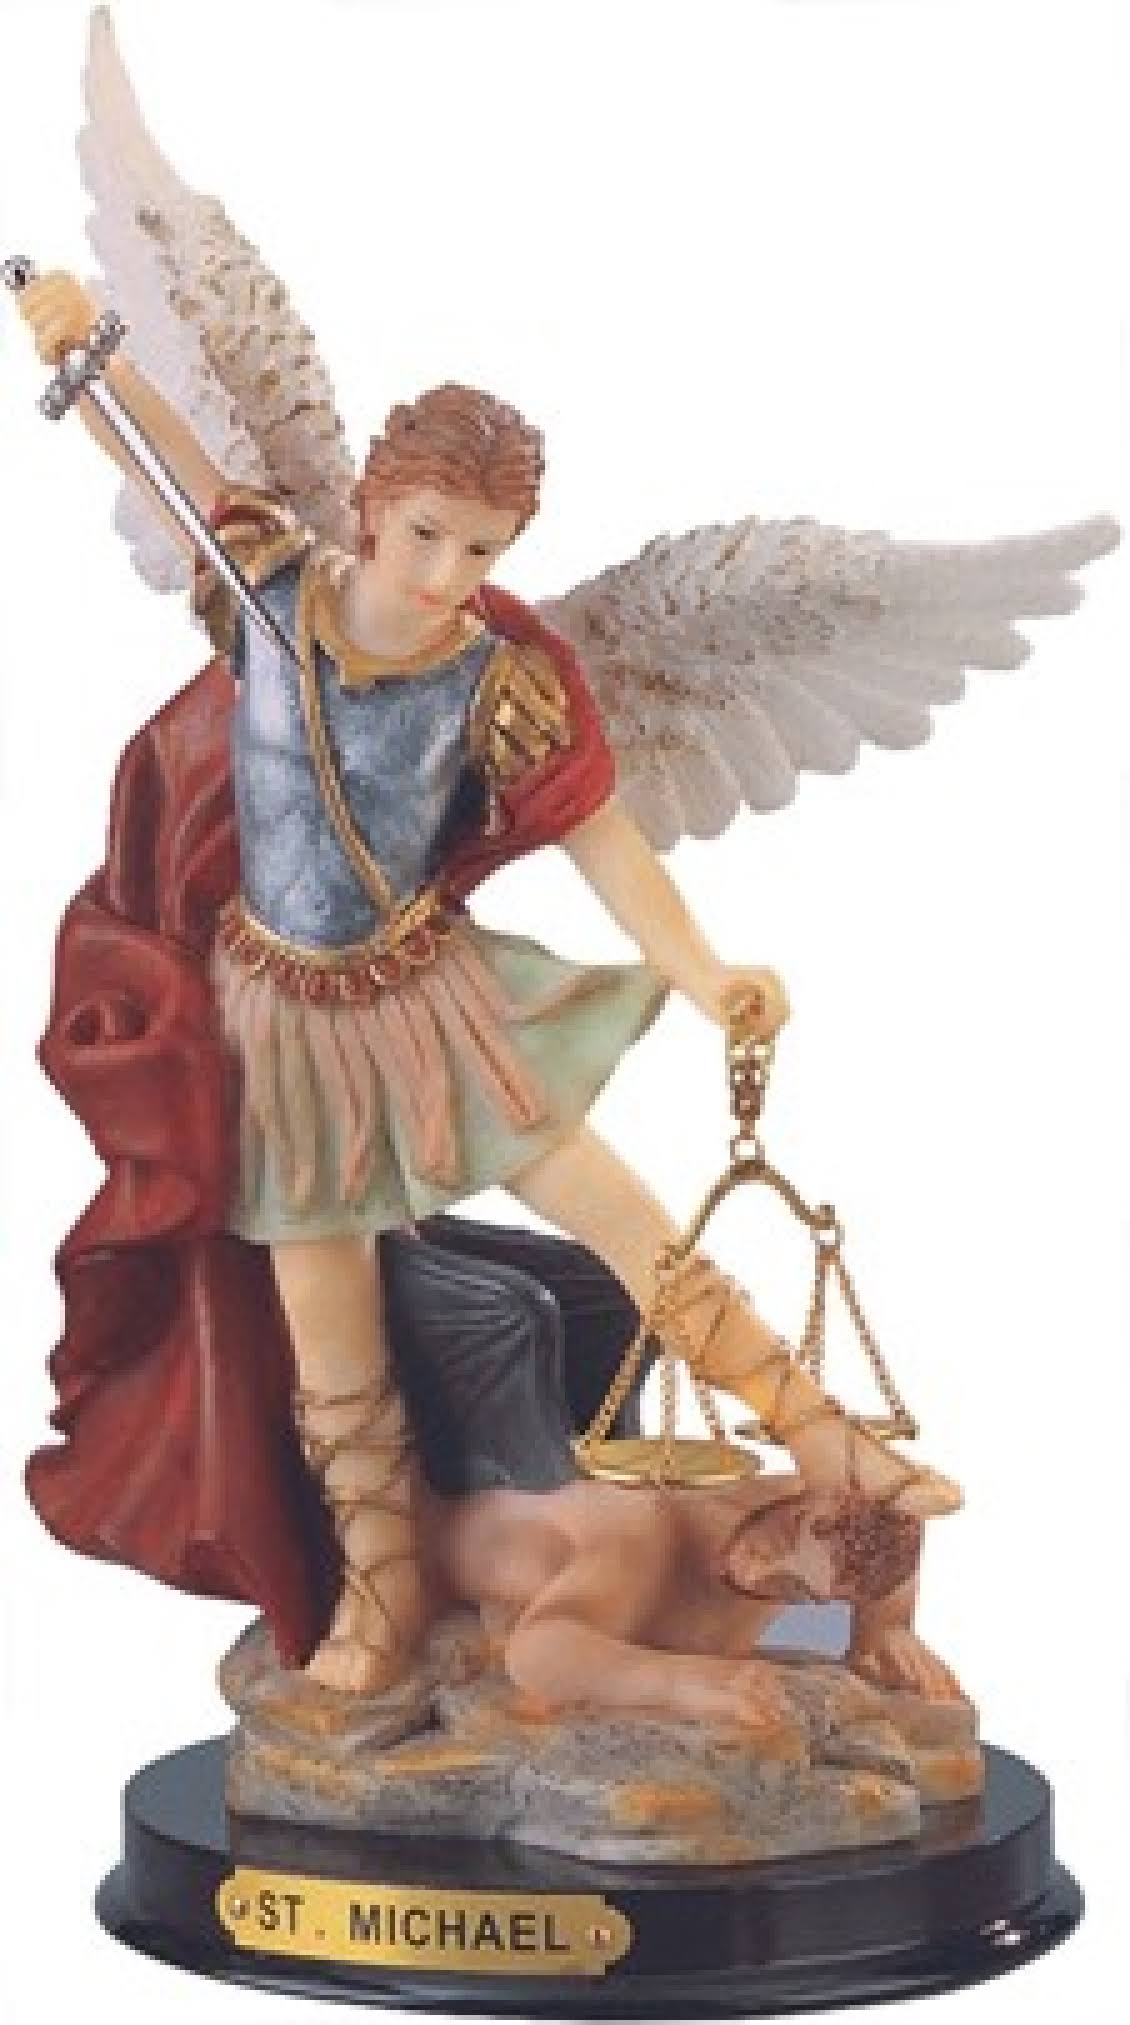 StealStreet SS-G-309.04 Saint Michael The Archangel Holy Figurine Religious Decoration 9"